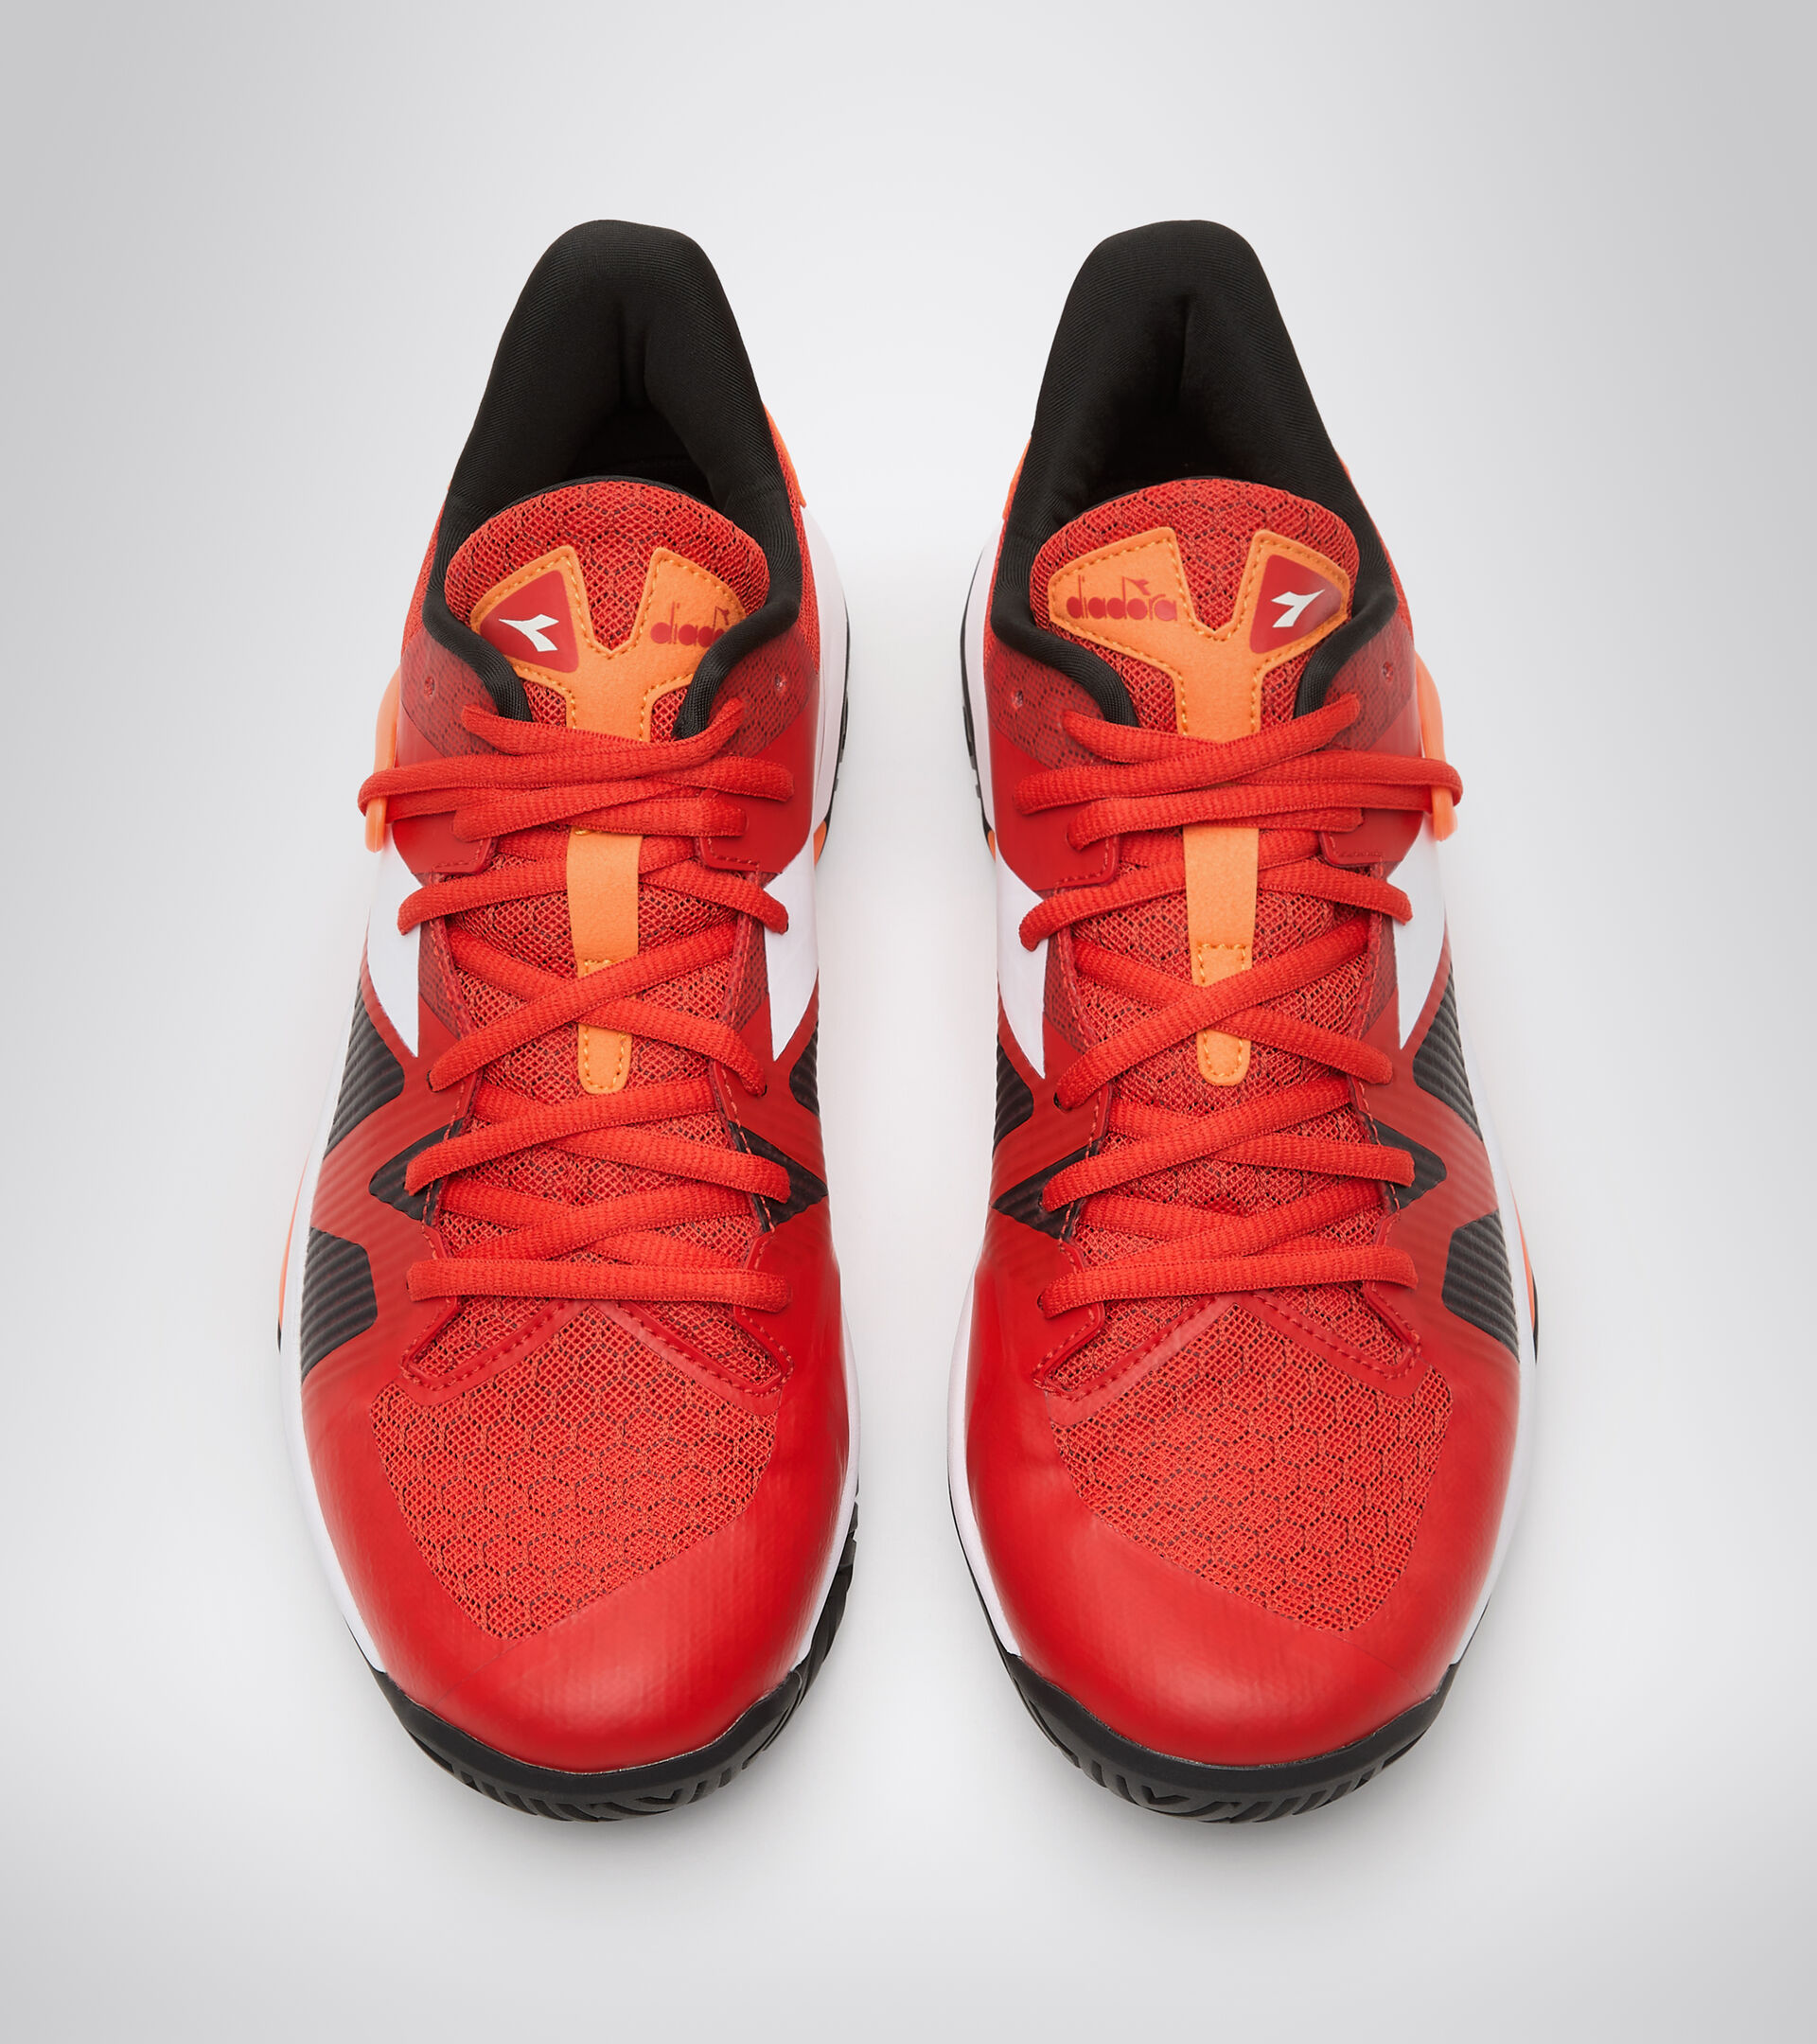 Tennis shoes - Men B.ICON AG FIERY RED/WHITE/BLACK - Diadora